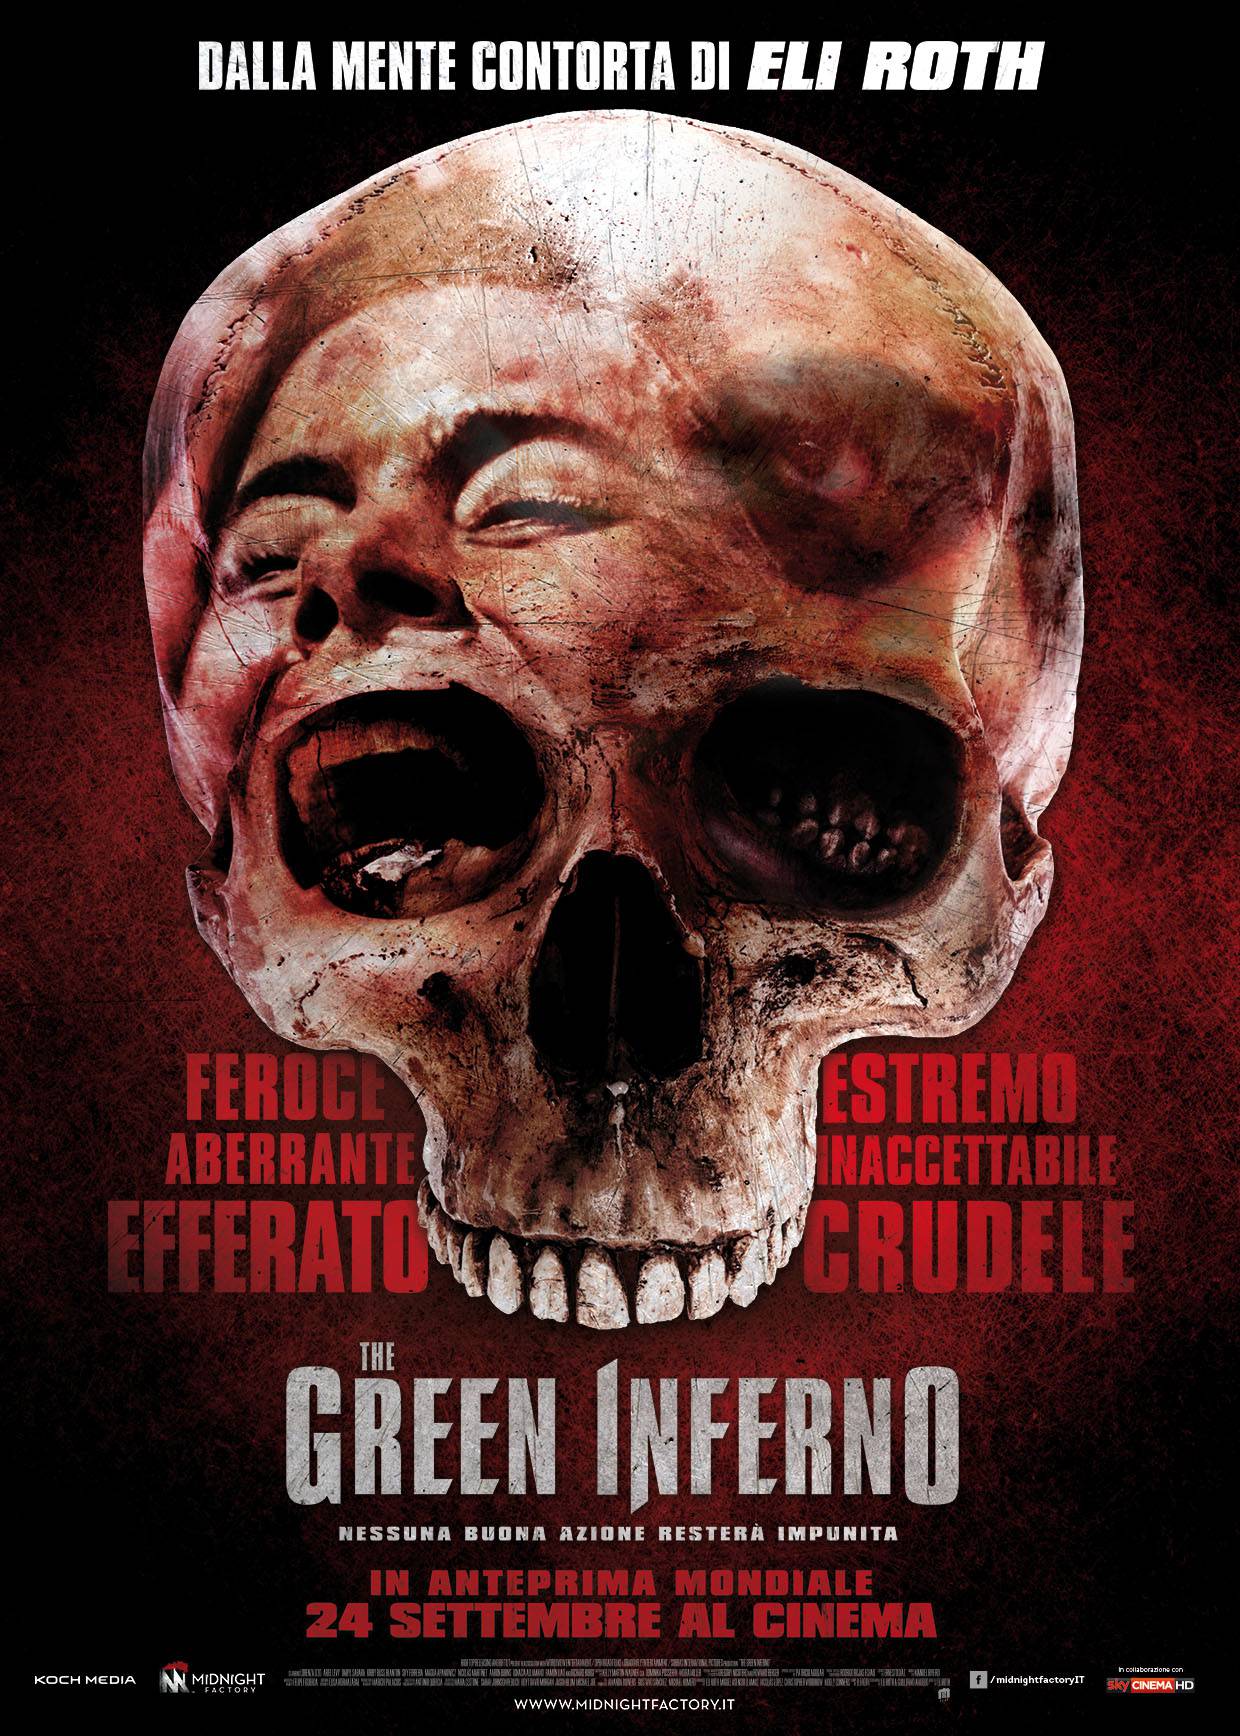 The Green Inferno, vuttana che fame!